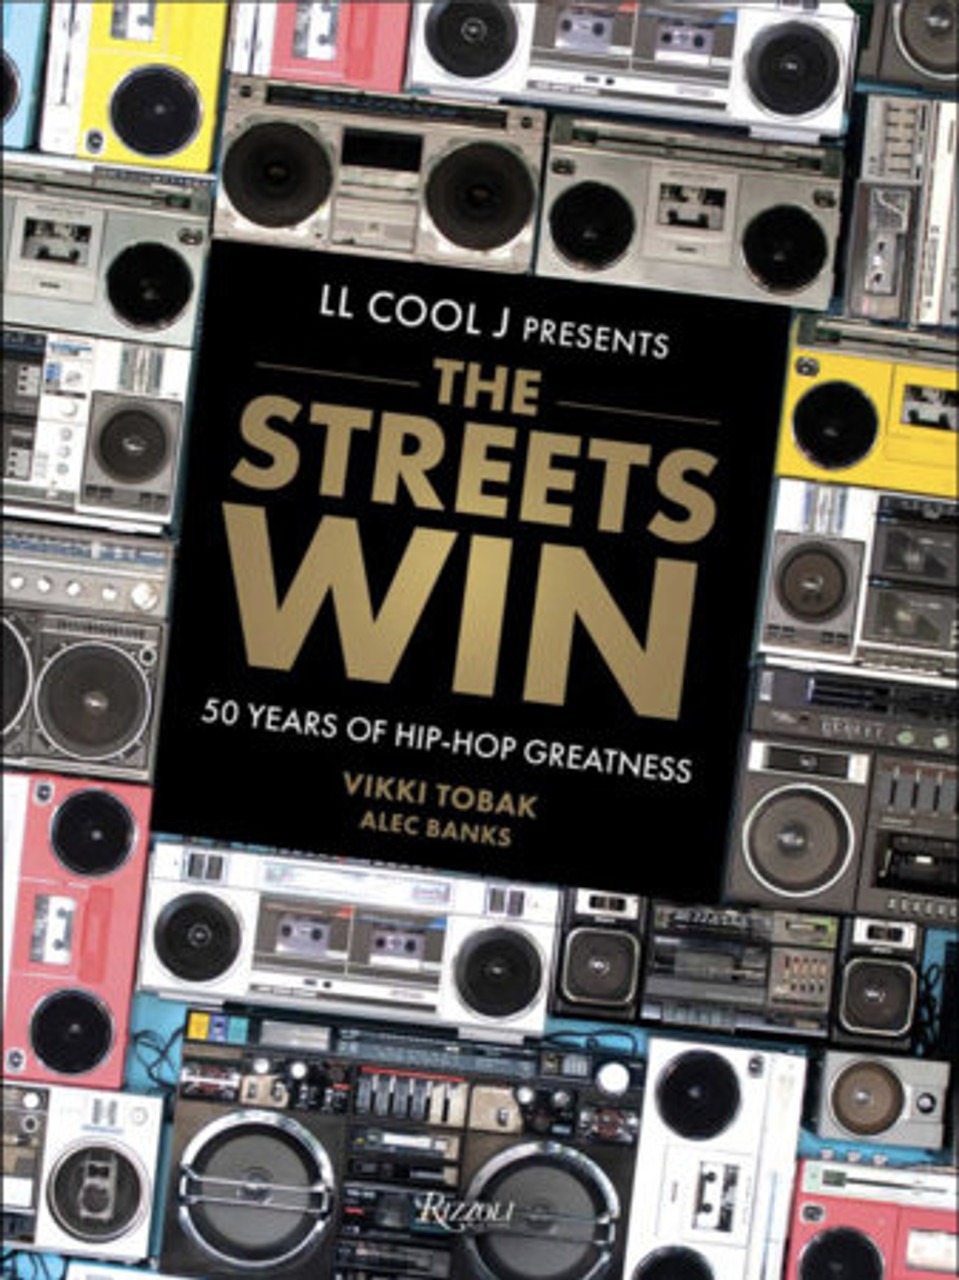 LL COOL J Presents: The Streets Win